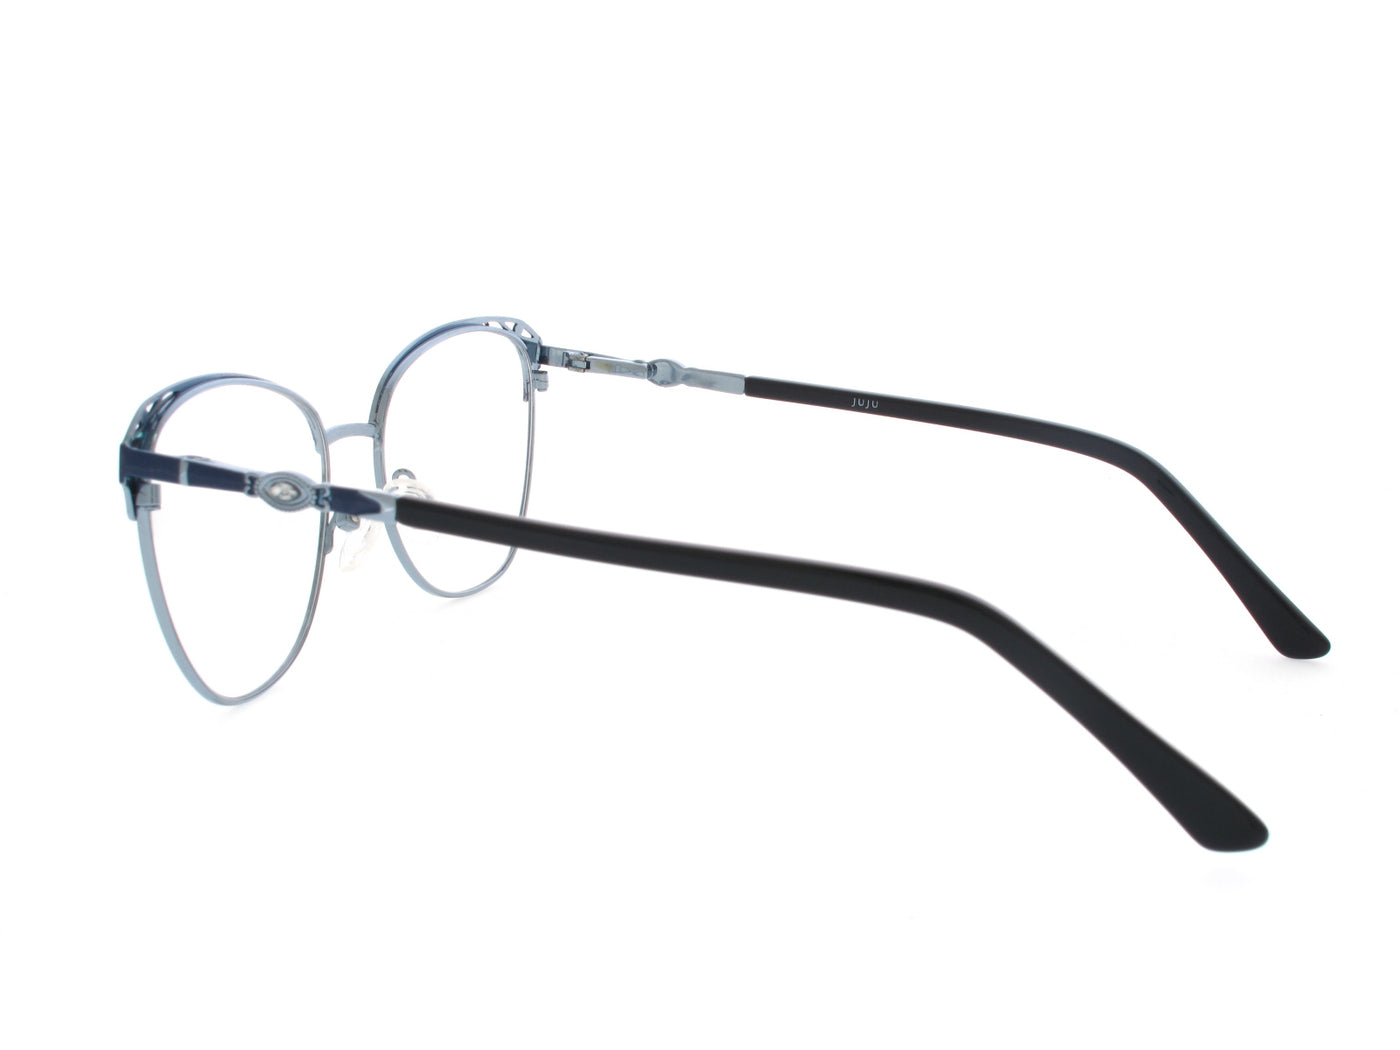 Cateye Glasses 619484